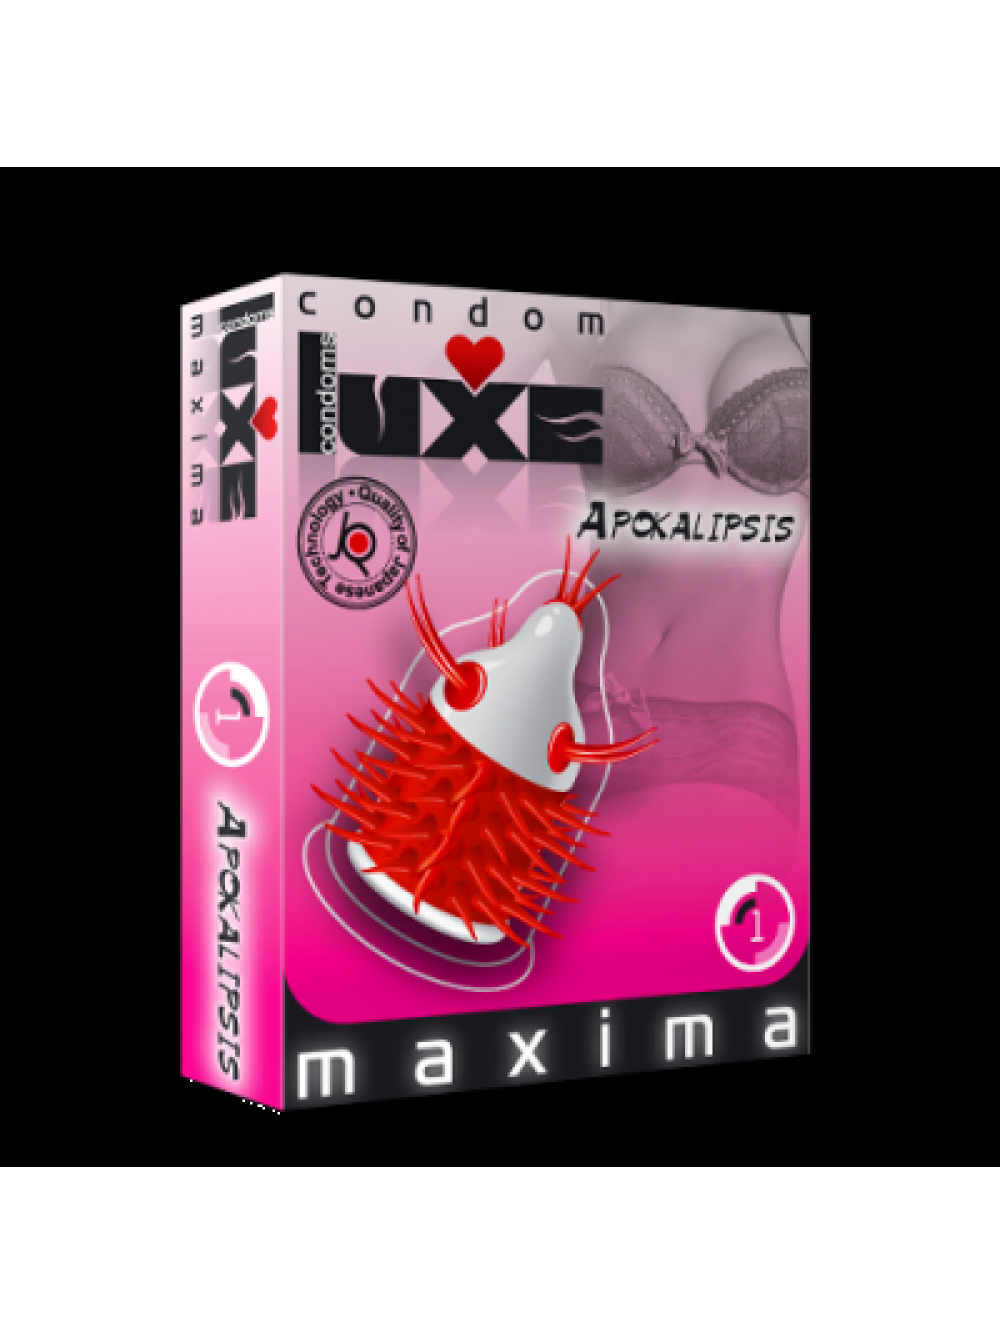  Luxe Condom Apokalipsis 6934439713269 